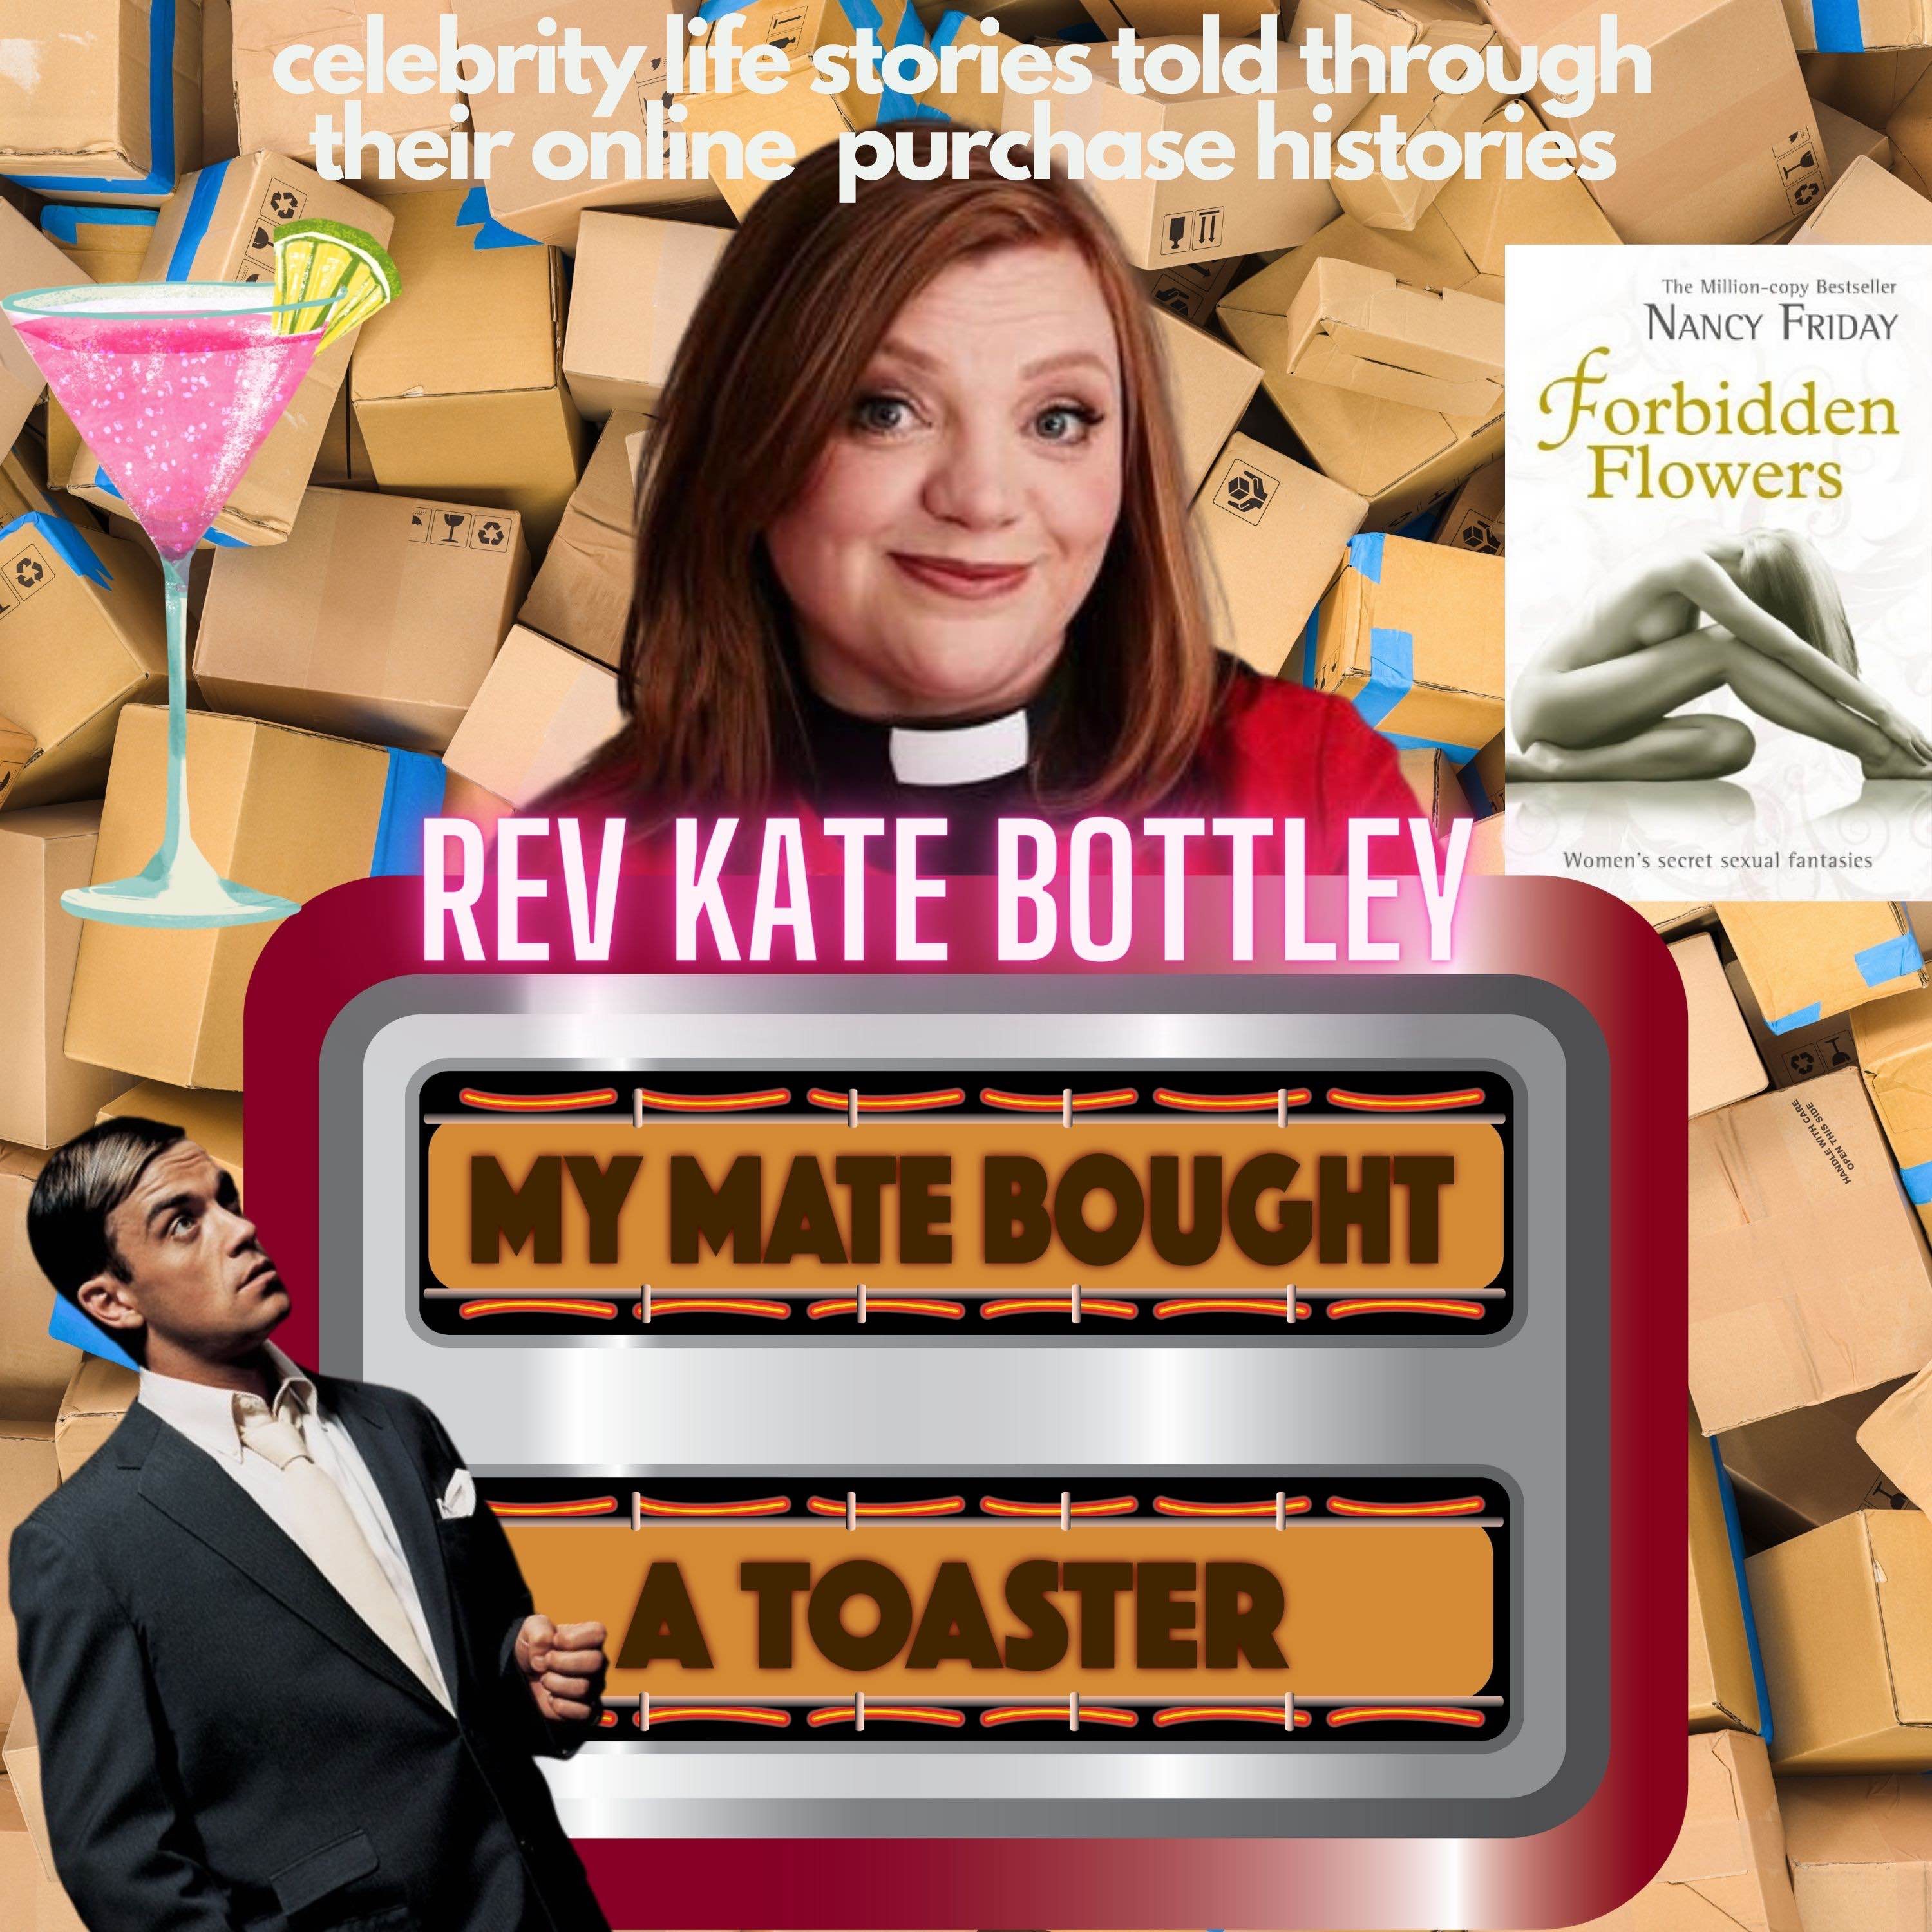 Rev Kate Bottley